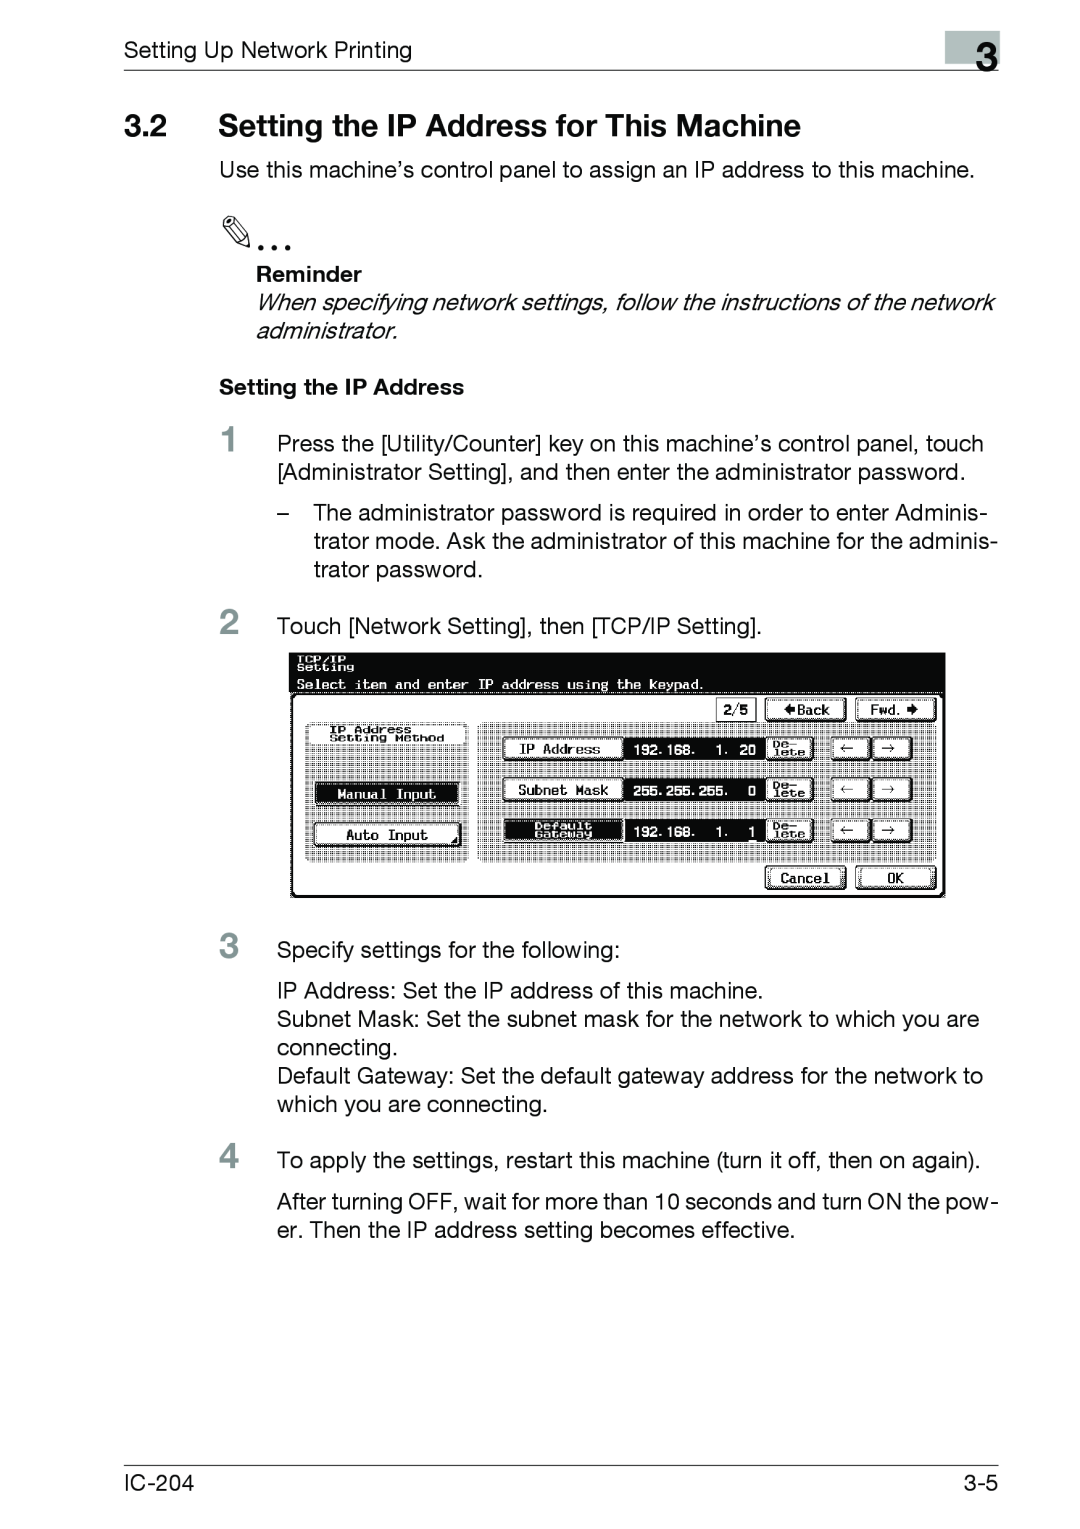 Konica Minolta IC-204 manual 3.2Setting the IP Address for This Machine, Reminder 